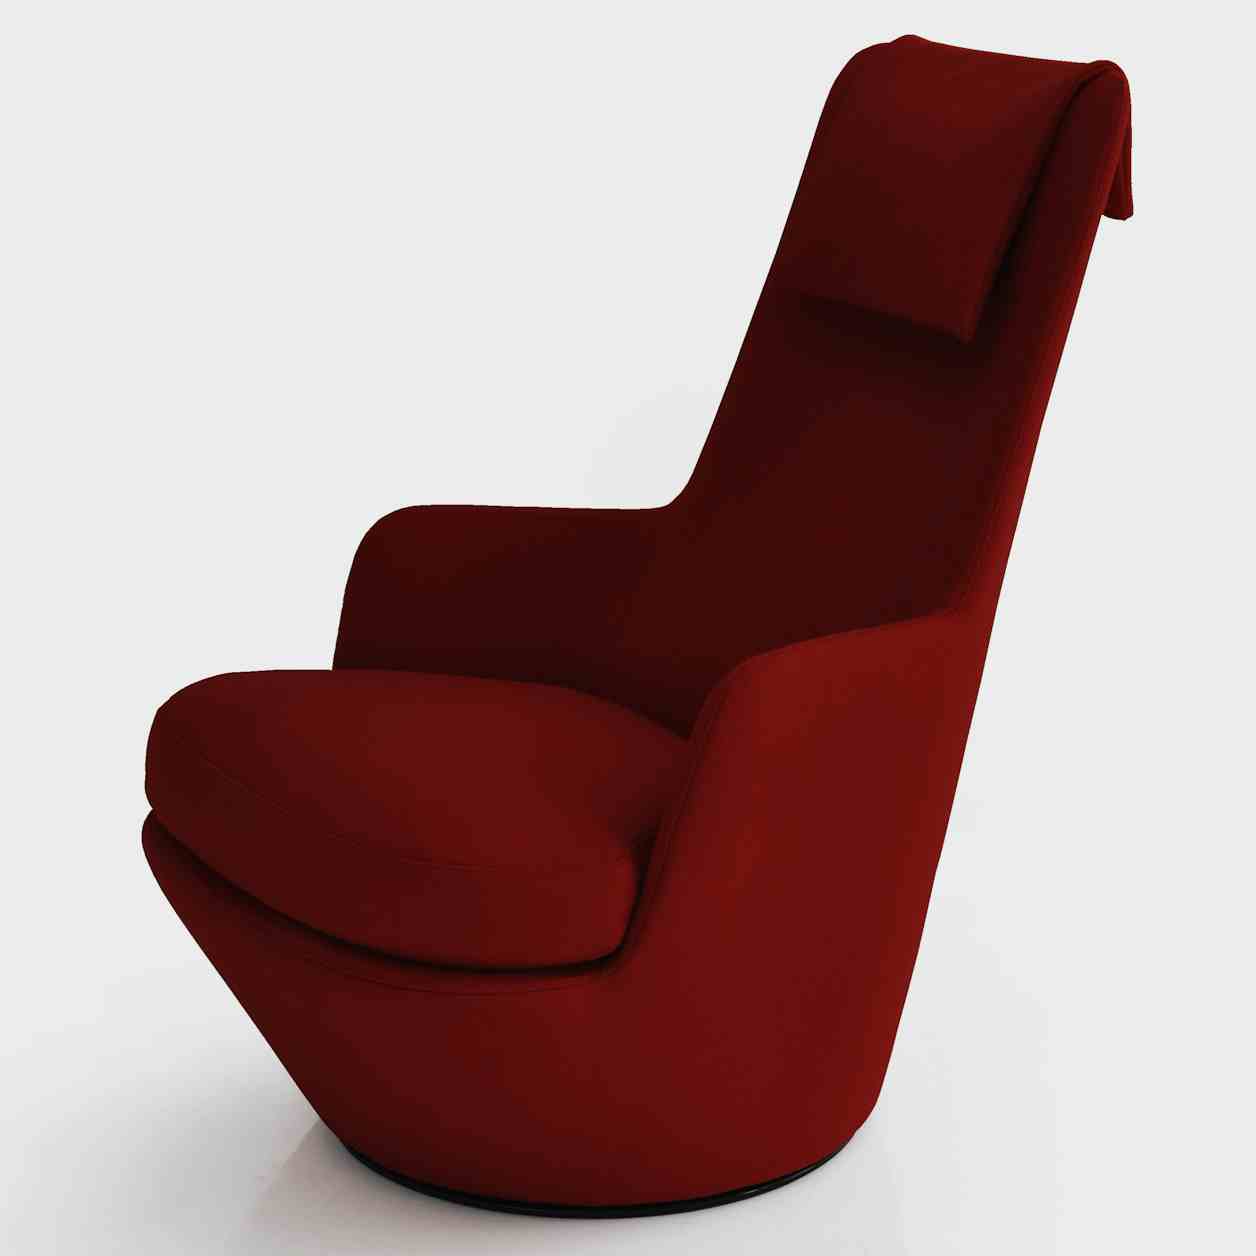 Bensen furniture hi turn chair red haute living